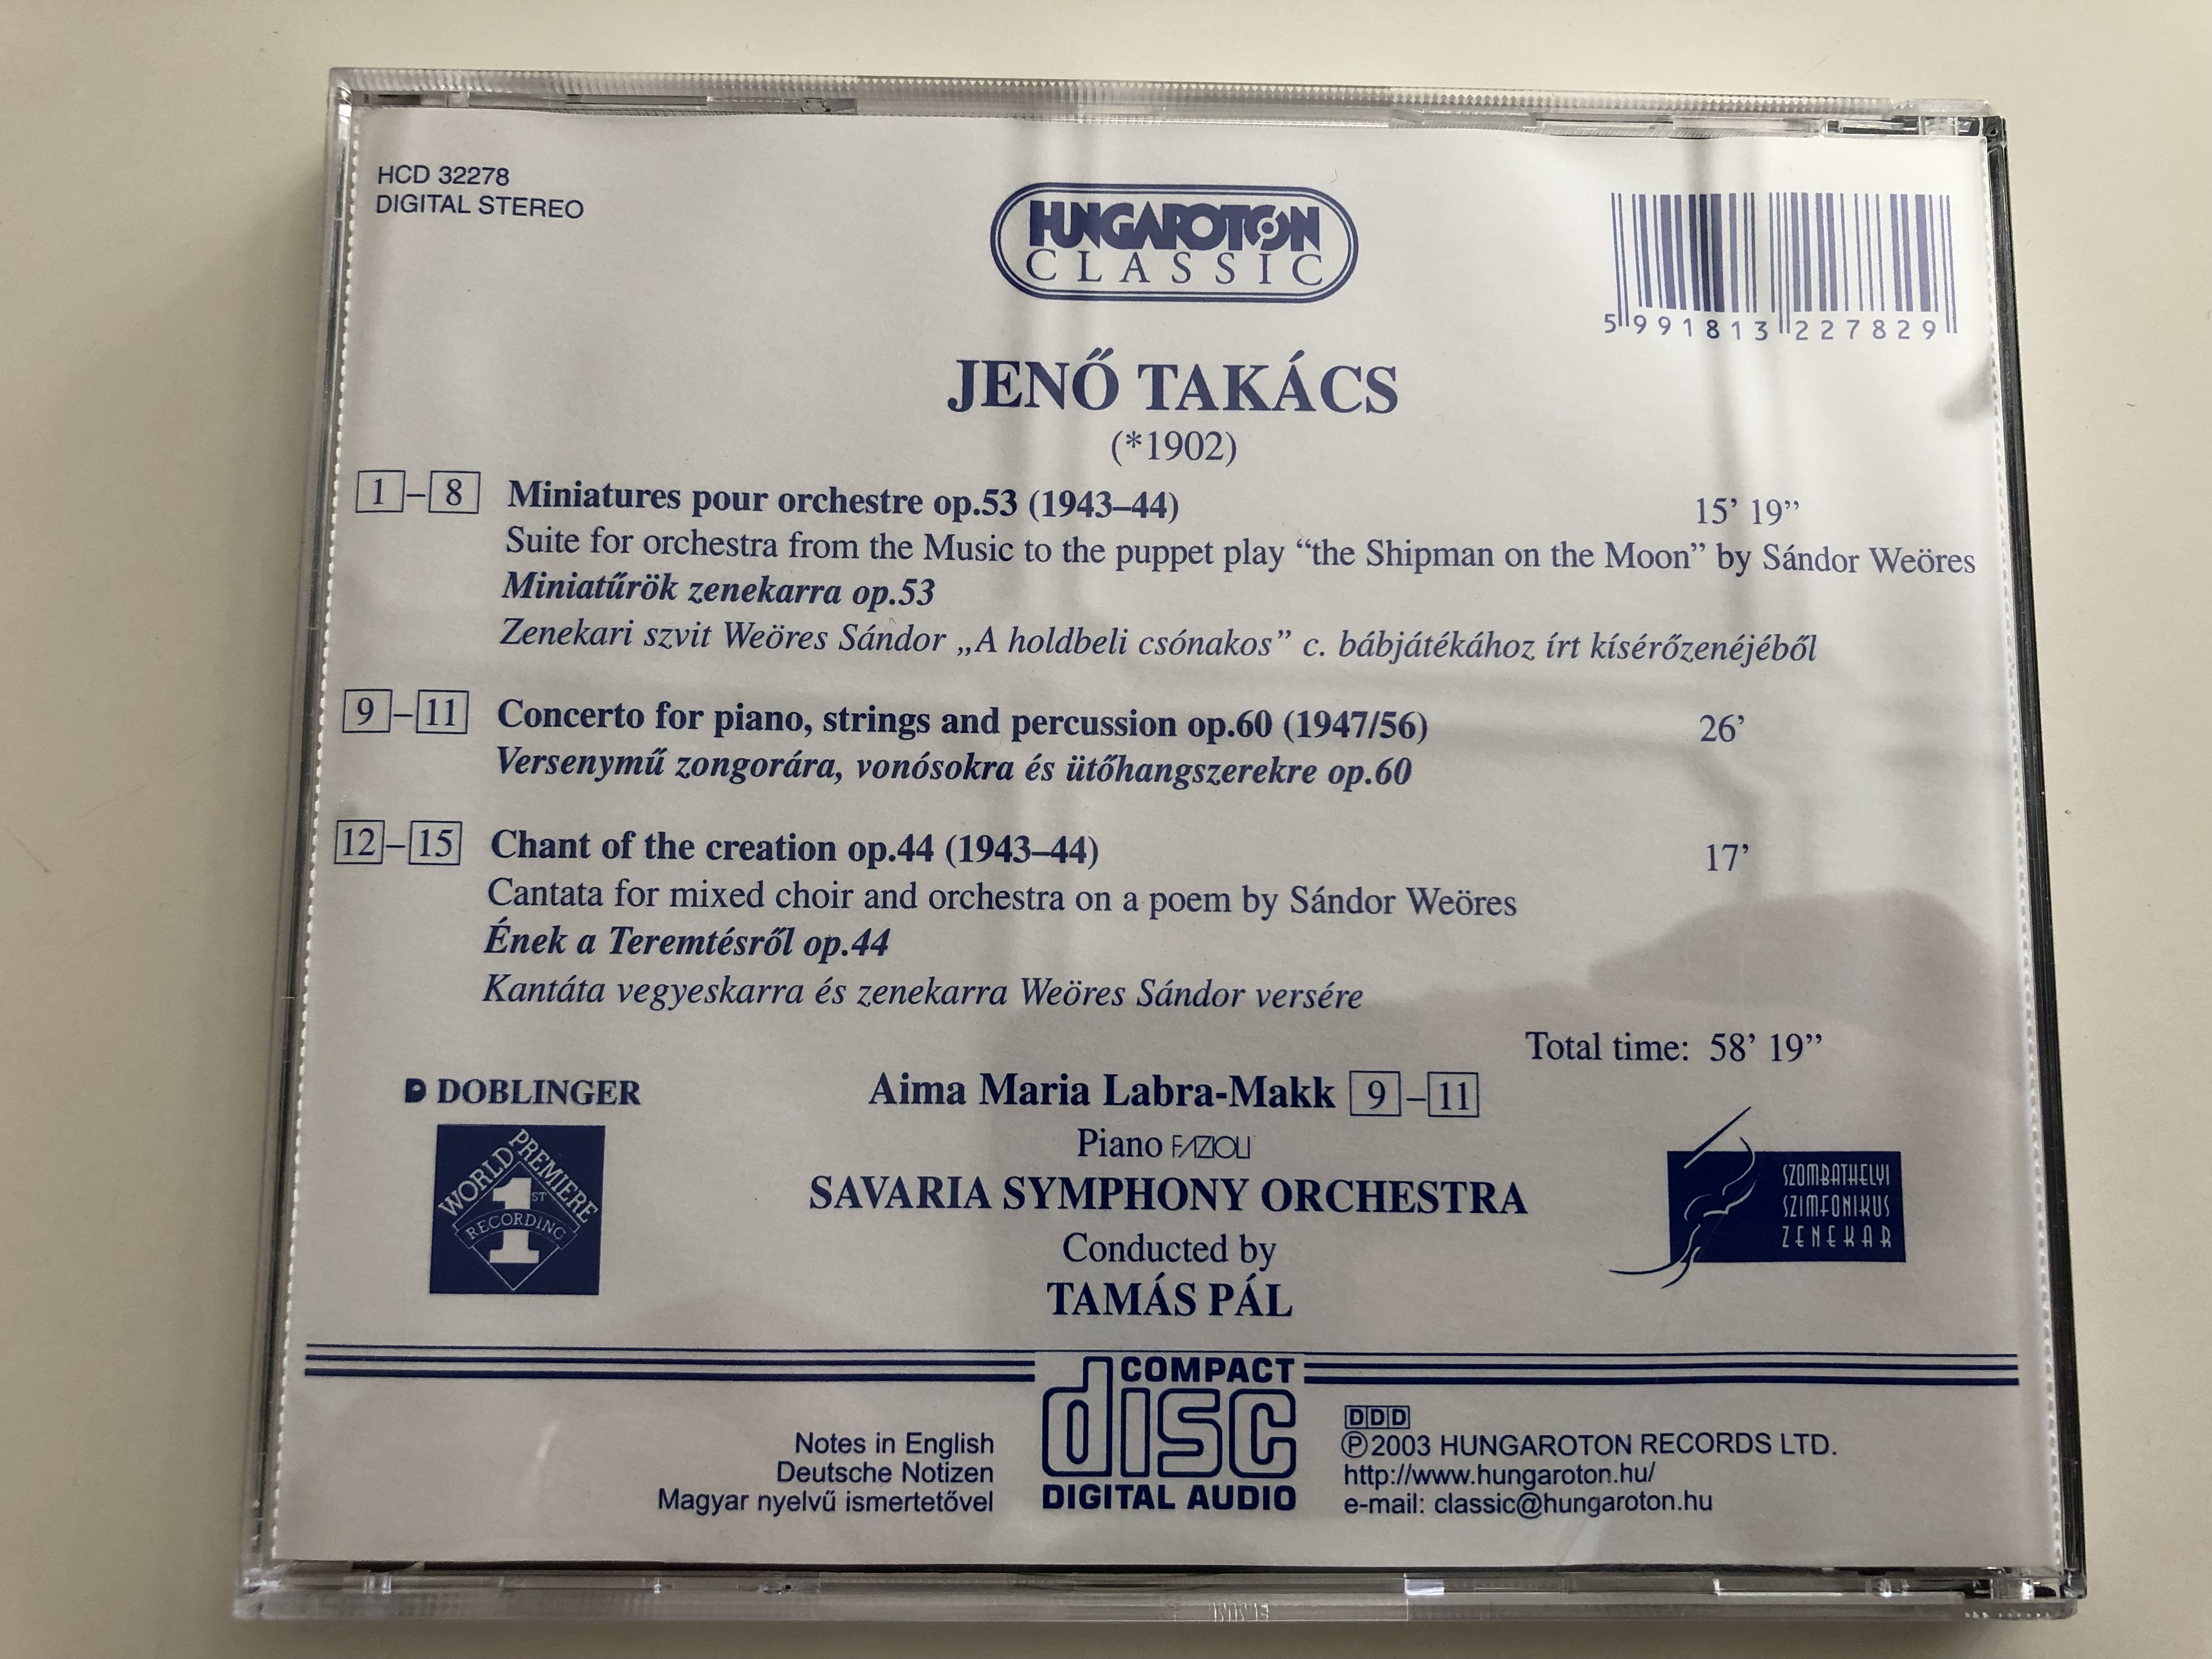 jen-tak-cs-miniatures-pour-orchestre-concerto-for-piano-strings-and-percussion-op.-60-savaria-symphony-orchestra-tam-s-p-l-aima-maria-labra-makk-piano-hungaroton-classic-audio-cd-2003-hcd-32278-13-.jpg